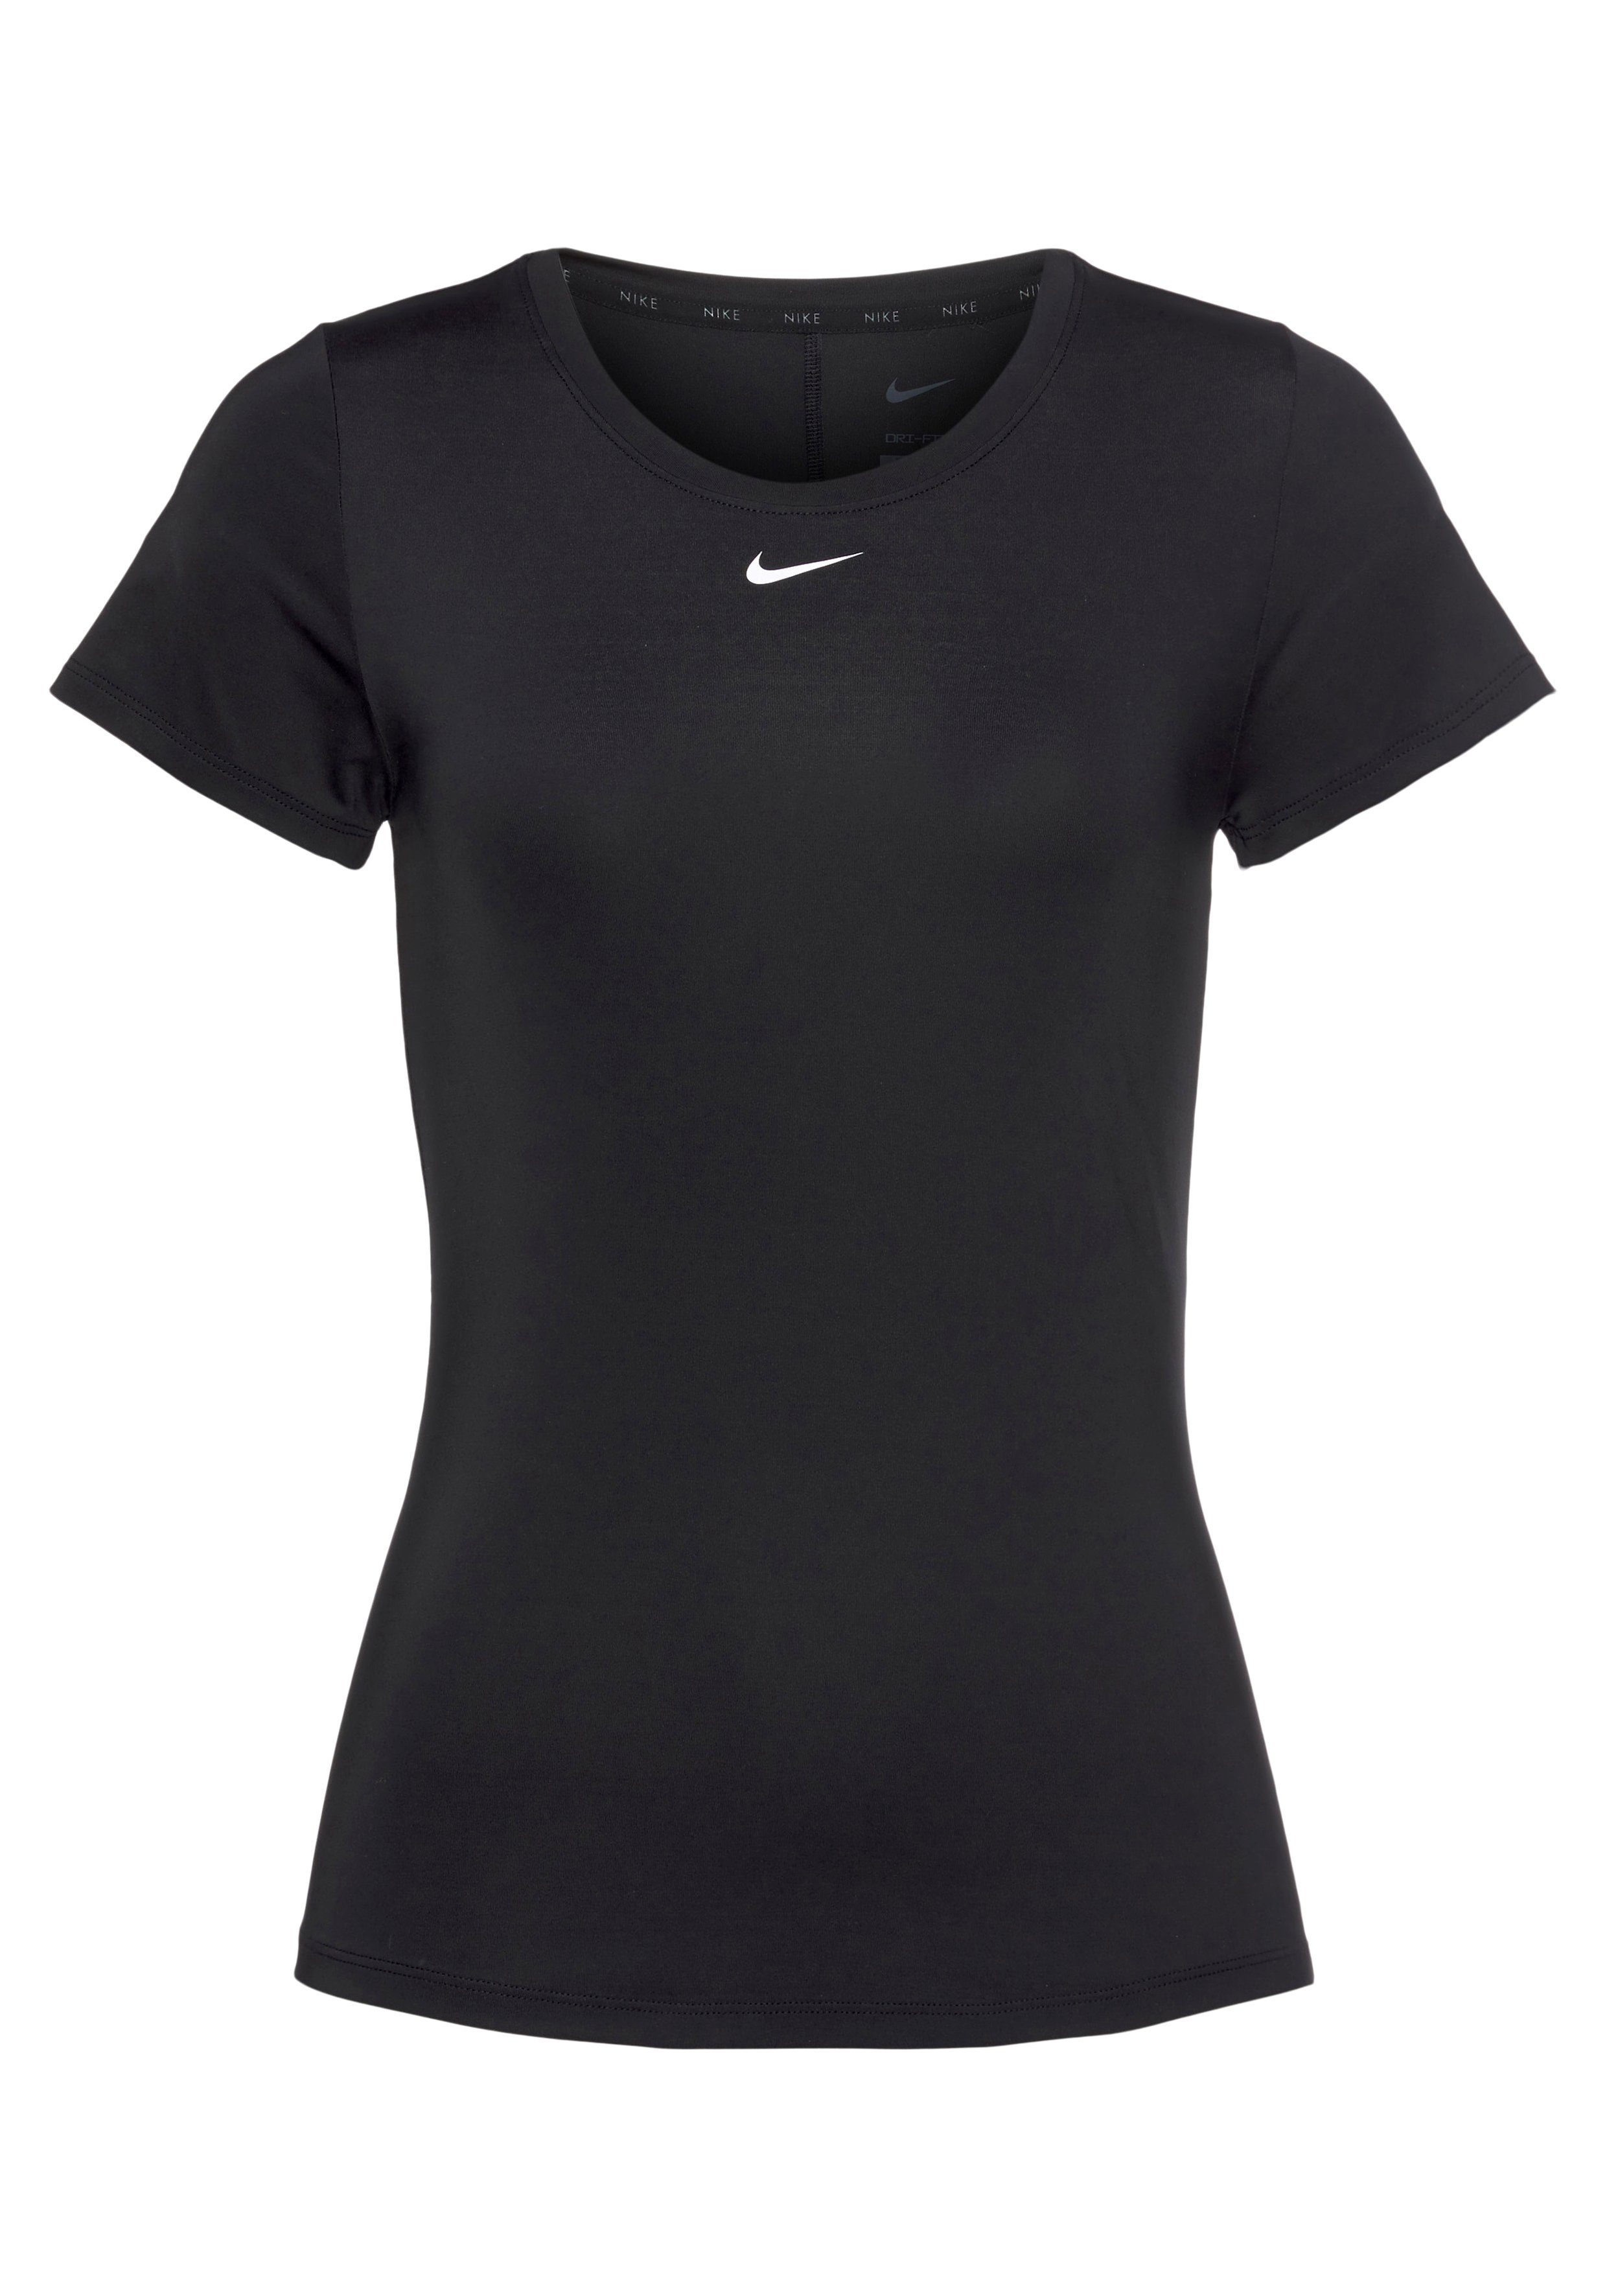 SHORT-SLEEVE ONE TOP DRI-FIT SLIM FIT Trainingsshirt Nike schwarz WOMEN'S